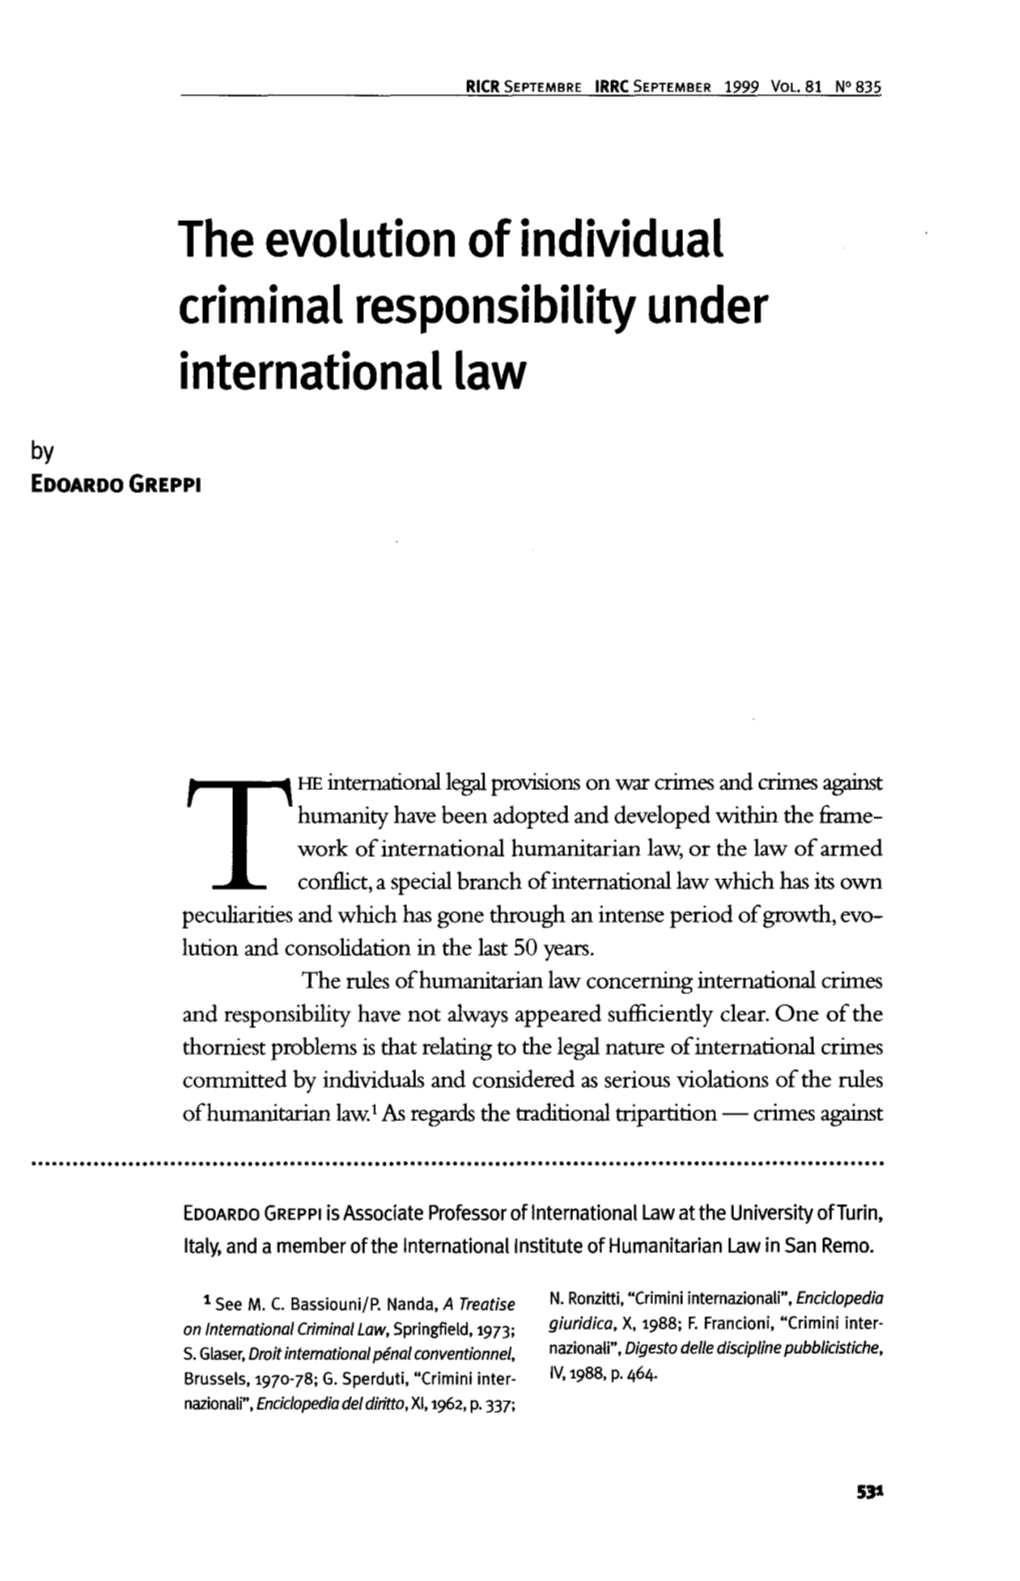 The Evolution of Individual Criminal Responsibility Under International Law by EDOARDO GREPPI